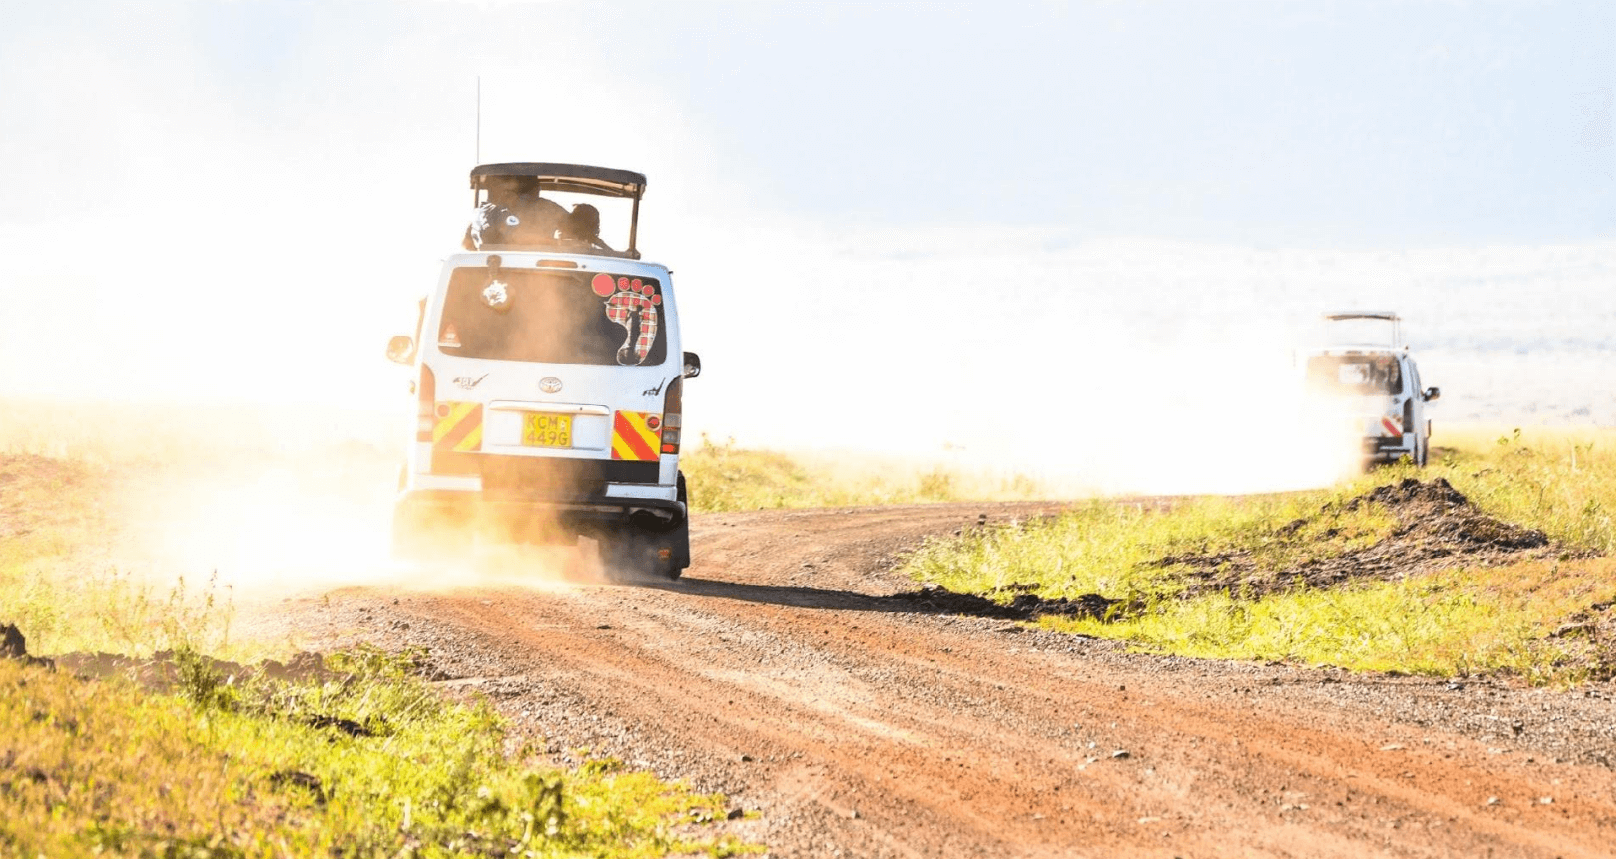 Safari Tour Vans